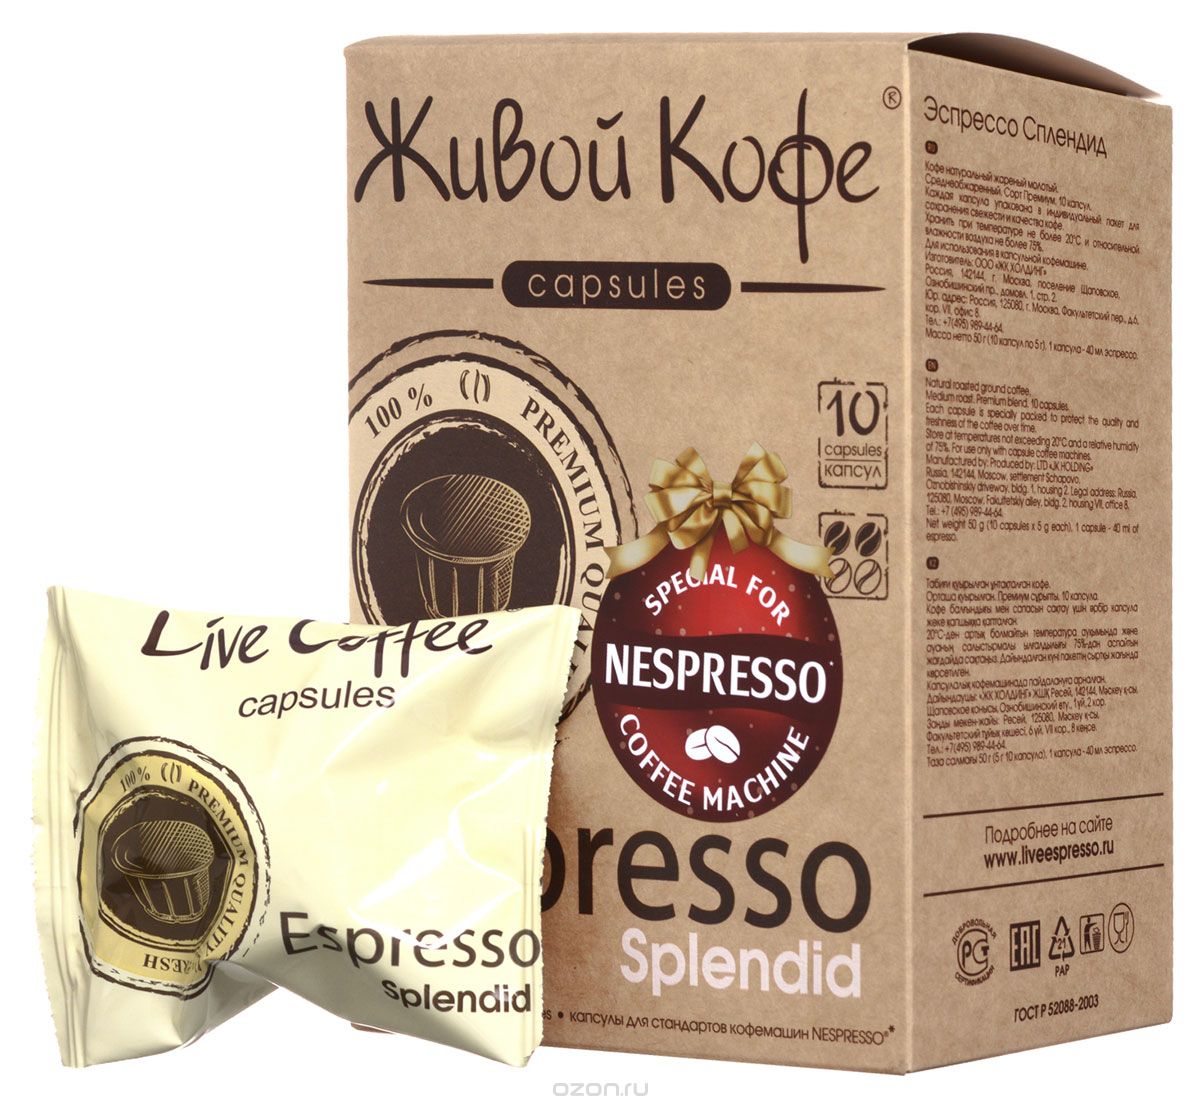   Espresso Splendid    ( ), 10 